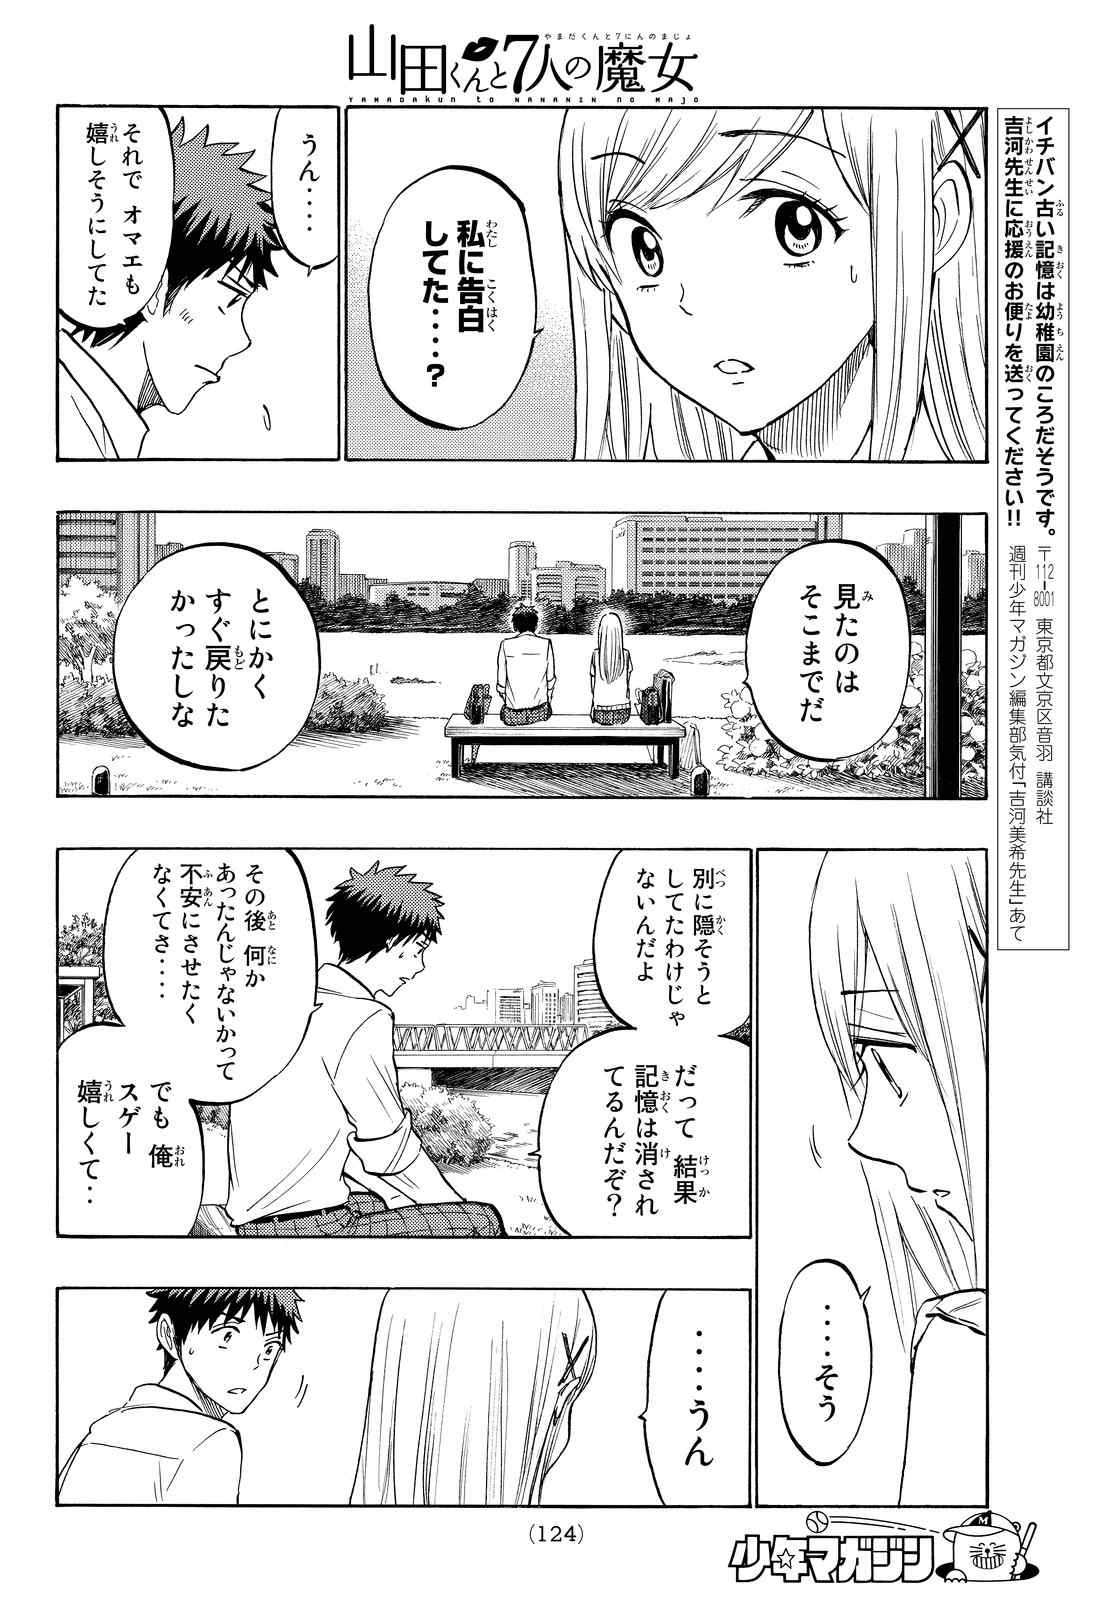 Yamada-kun to 7-nin no Majo - Chapter 216 - Page 18